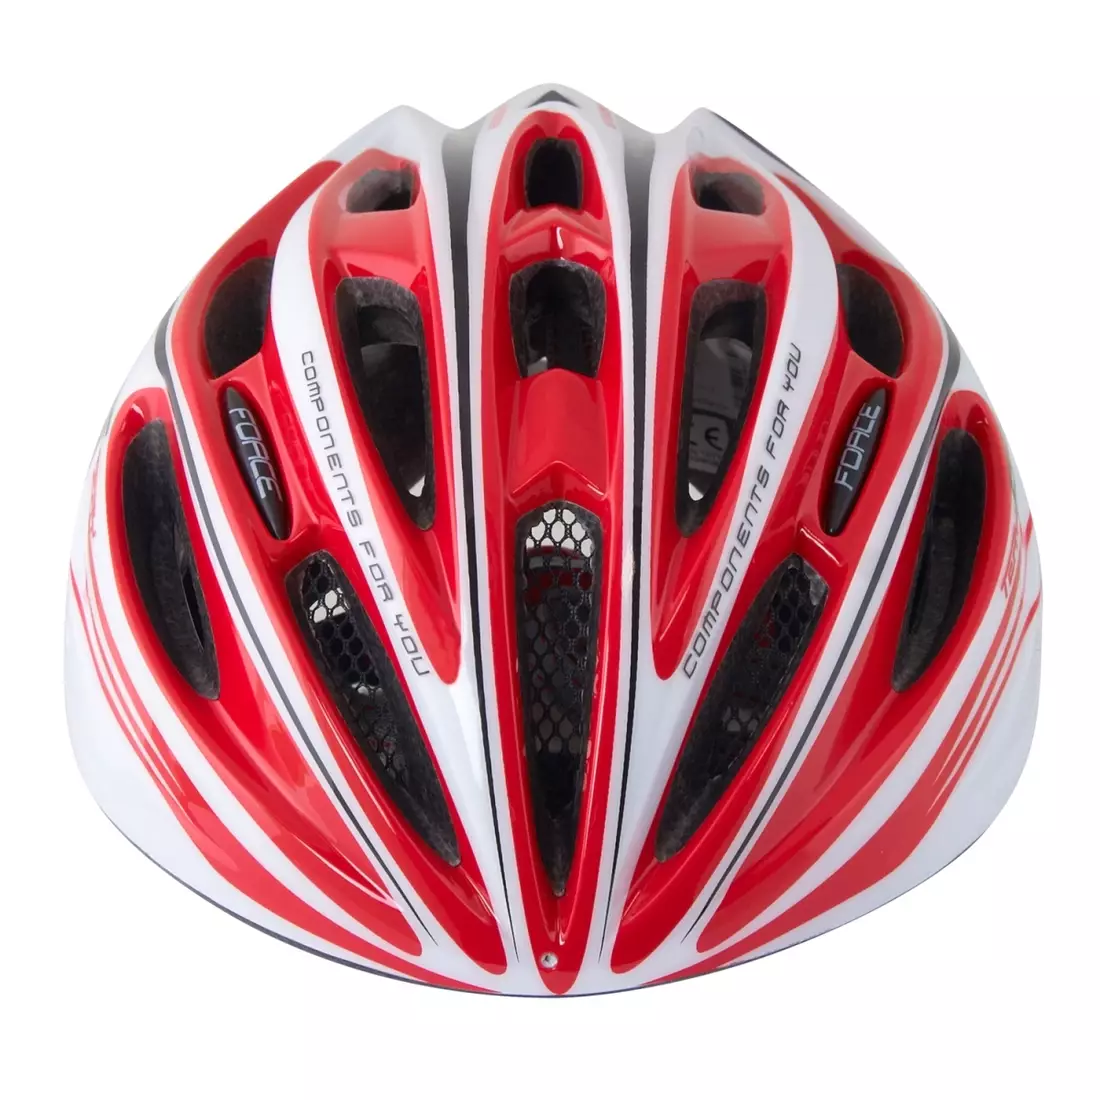 FORCE TERY bicycle helmet white-red-black 902723/4